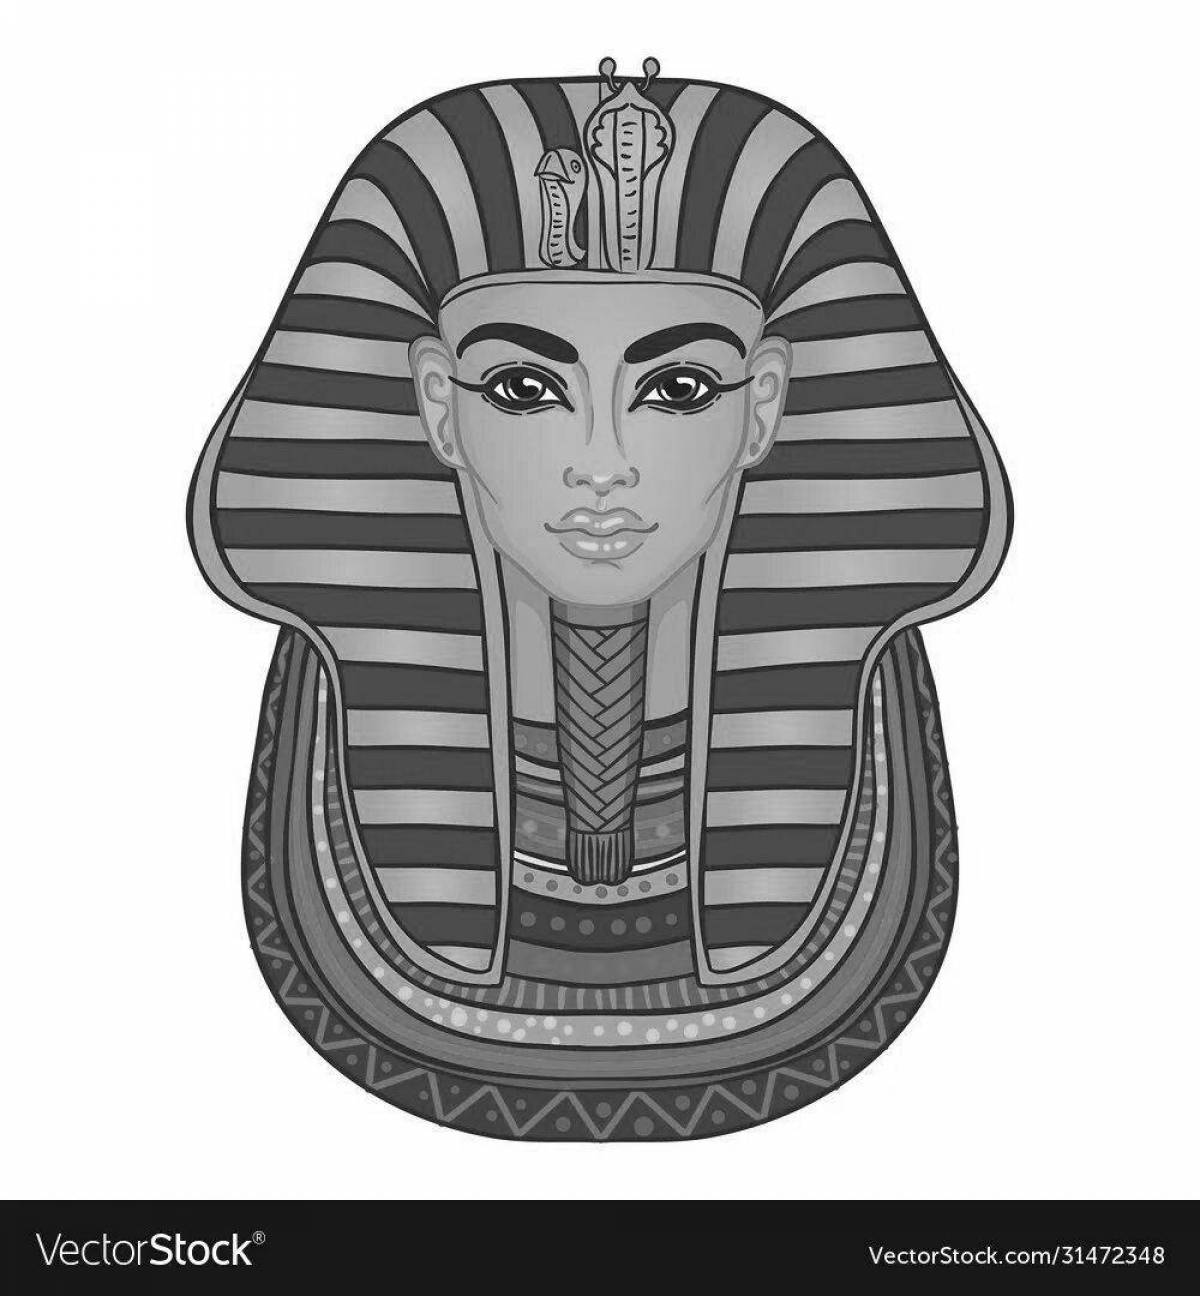 Coloring mask of the famous pharaoh tutankhamun